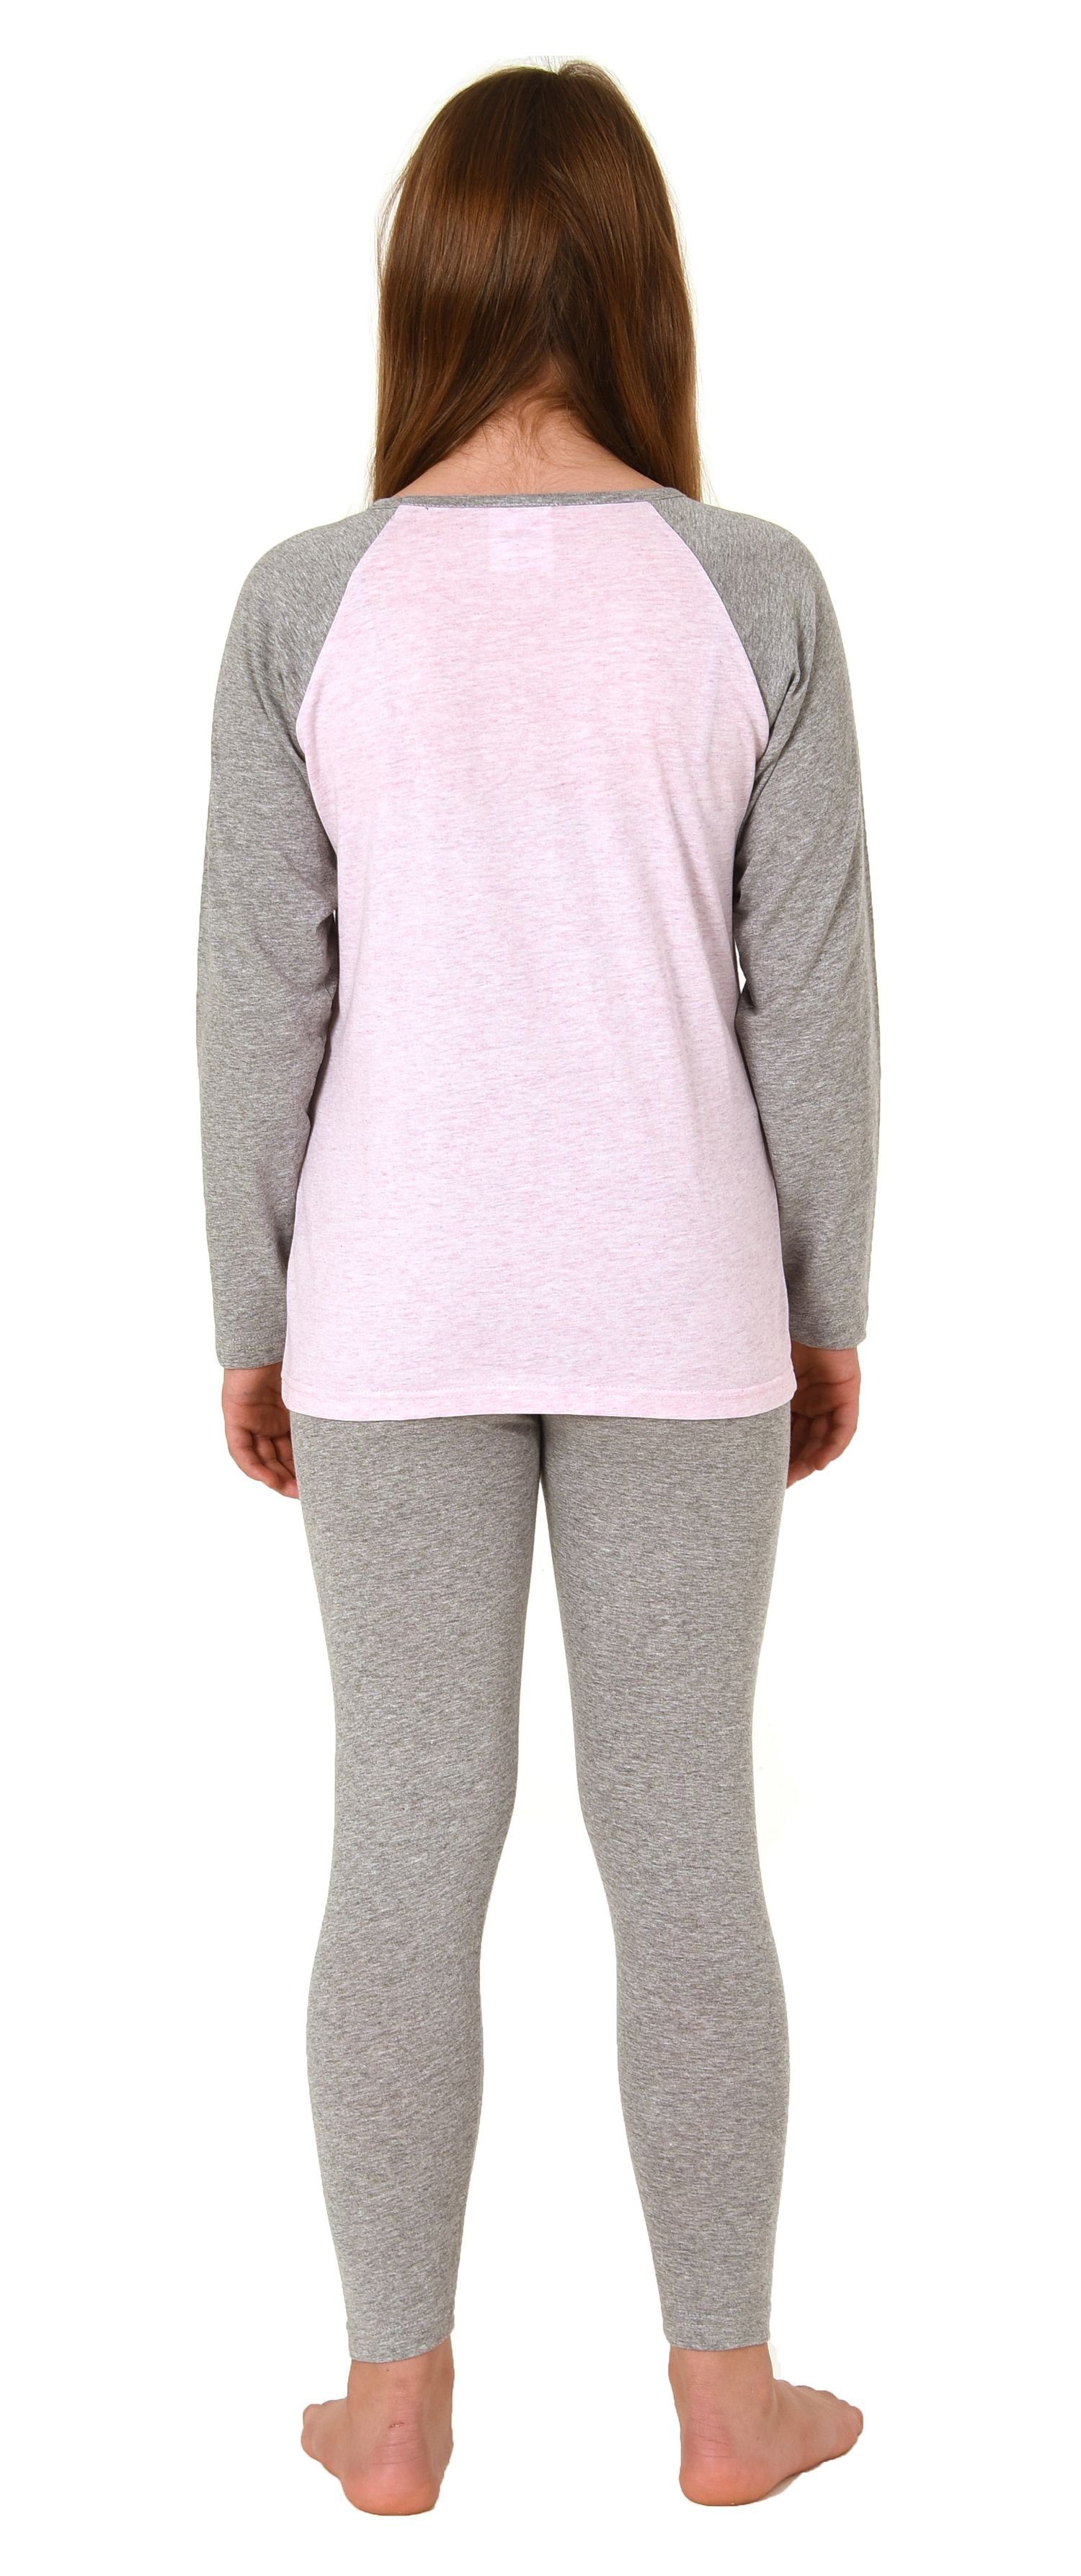 rosa Normann Pferde-Motiv Pyjama Schlafanzug mit Mädchen langarm, süßem Pyjama